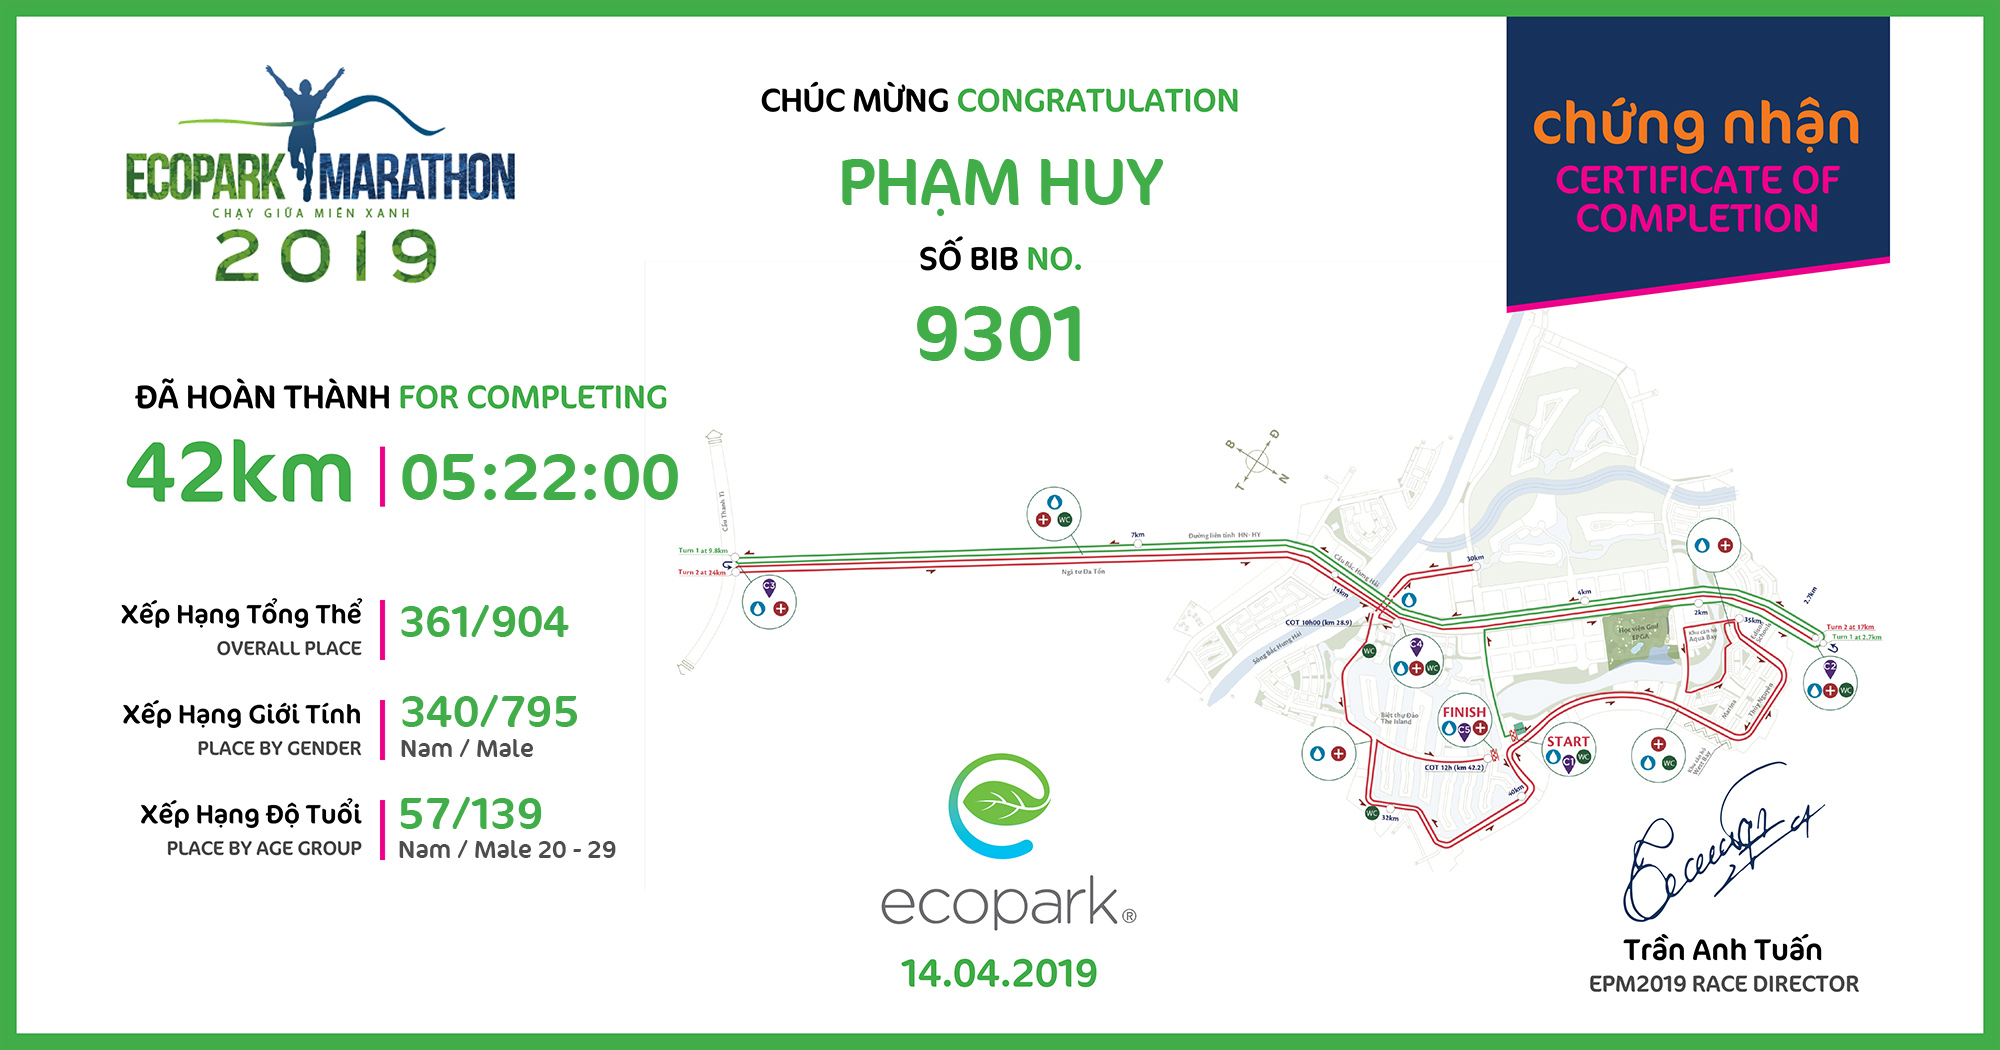 9301 - Phạm Huy